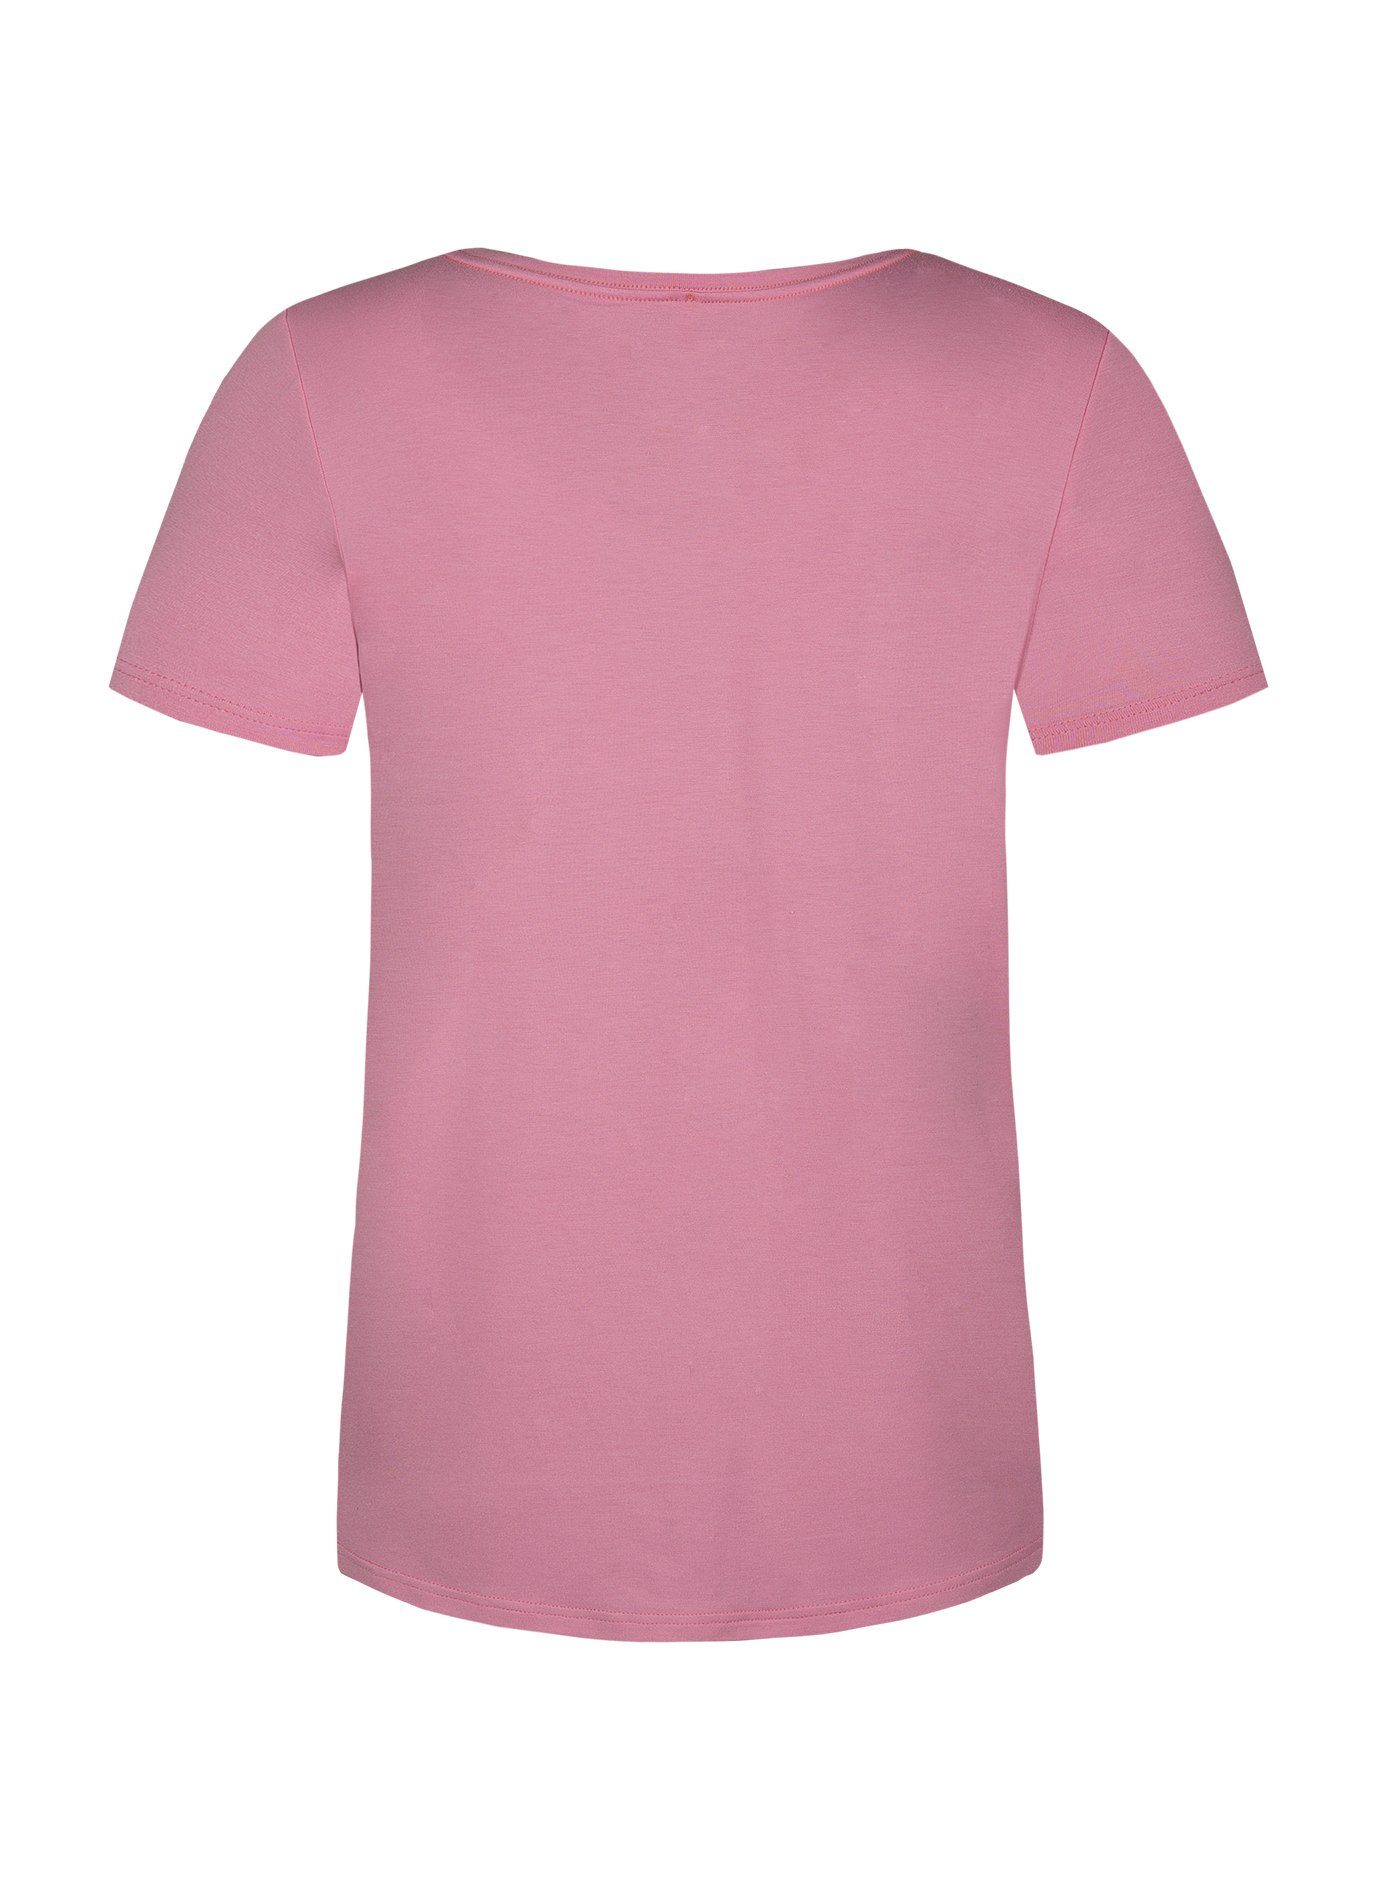 Short Stories Pyjamaoberteil SHORT Shirt 621334 STORIES pink soft